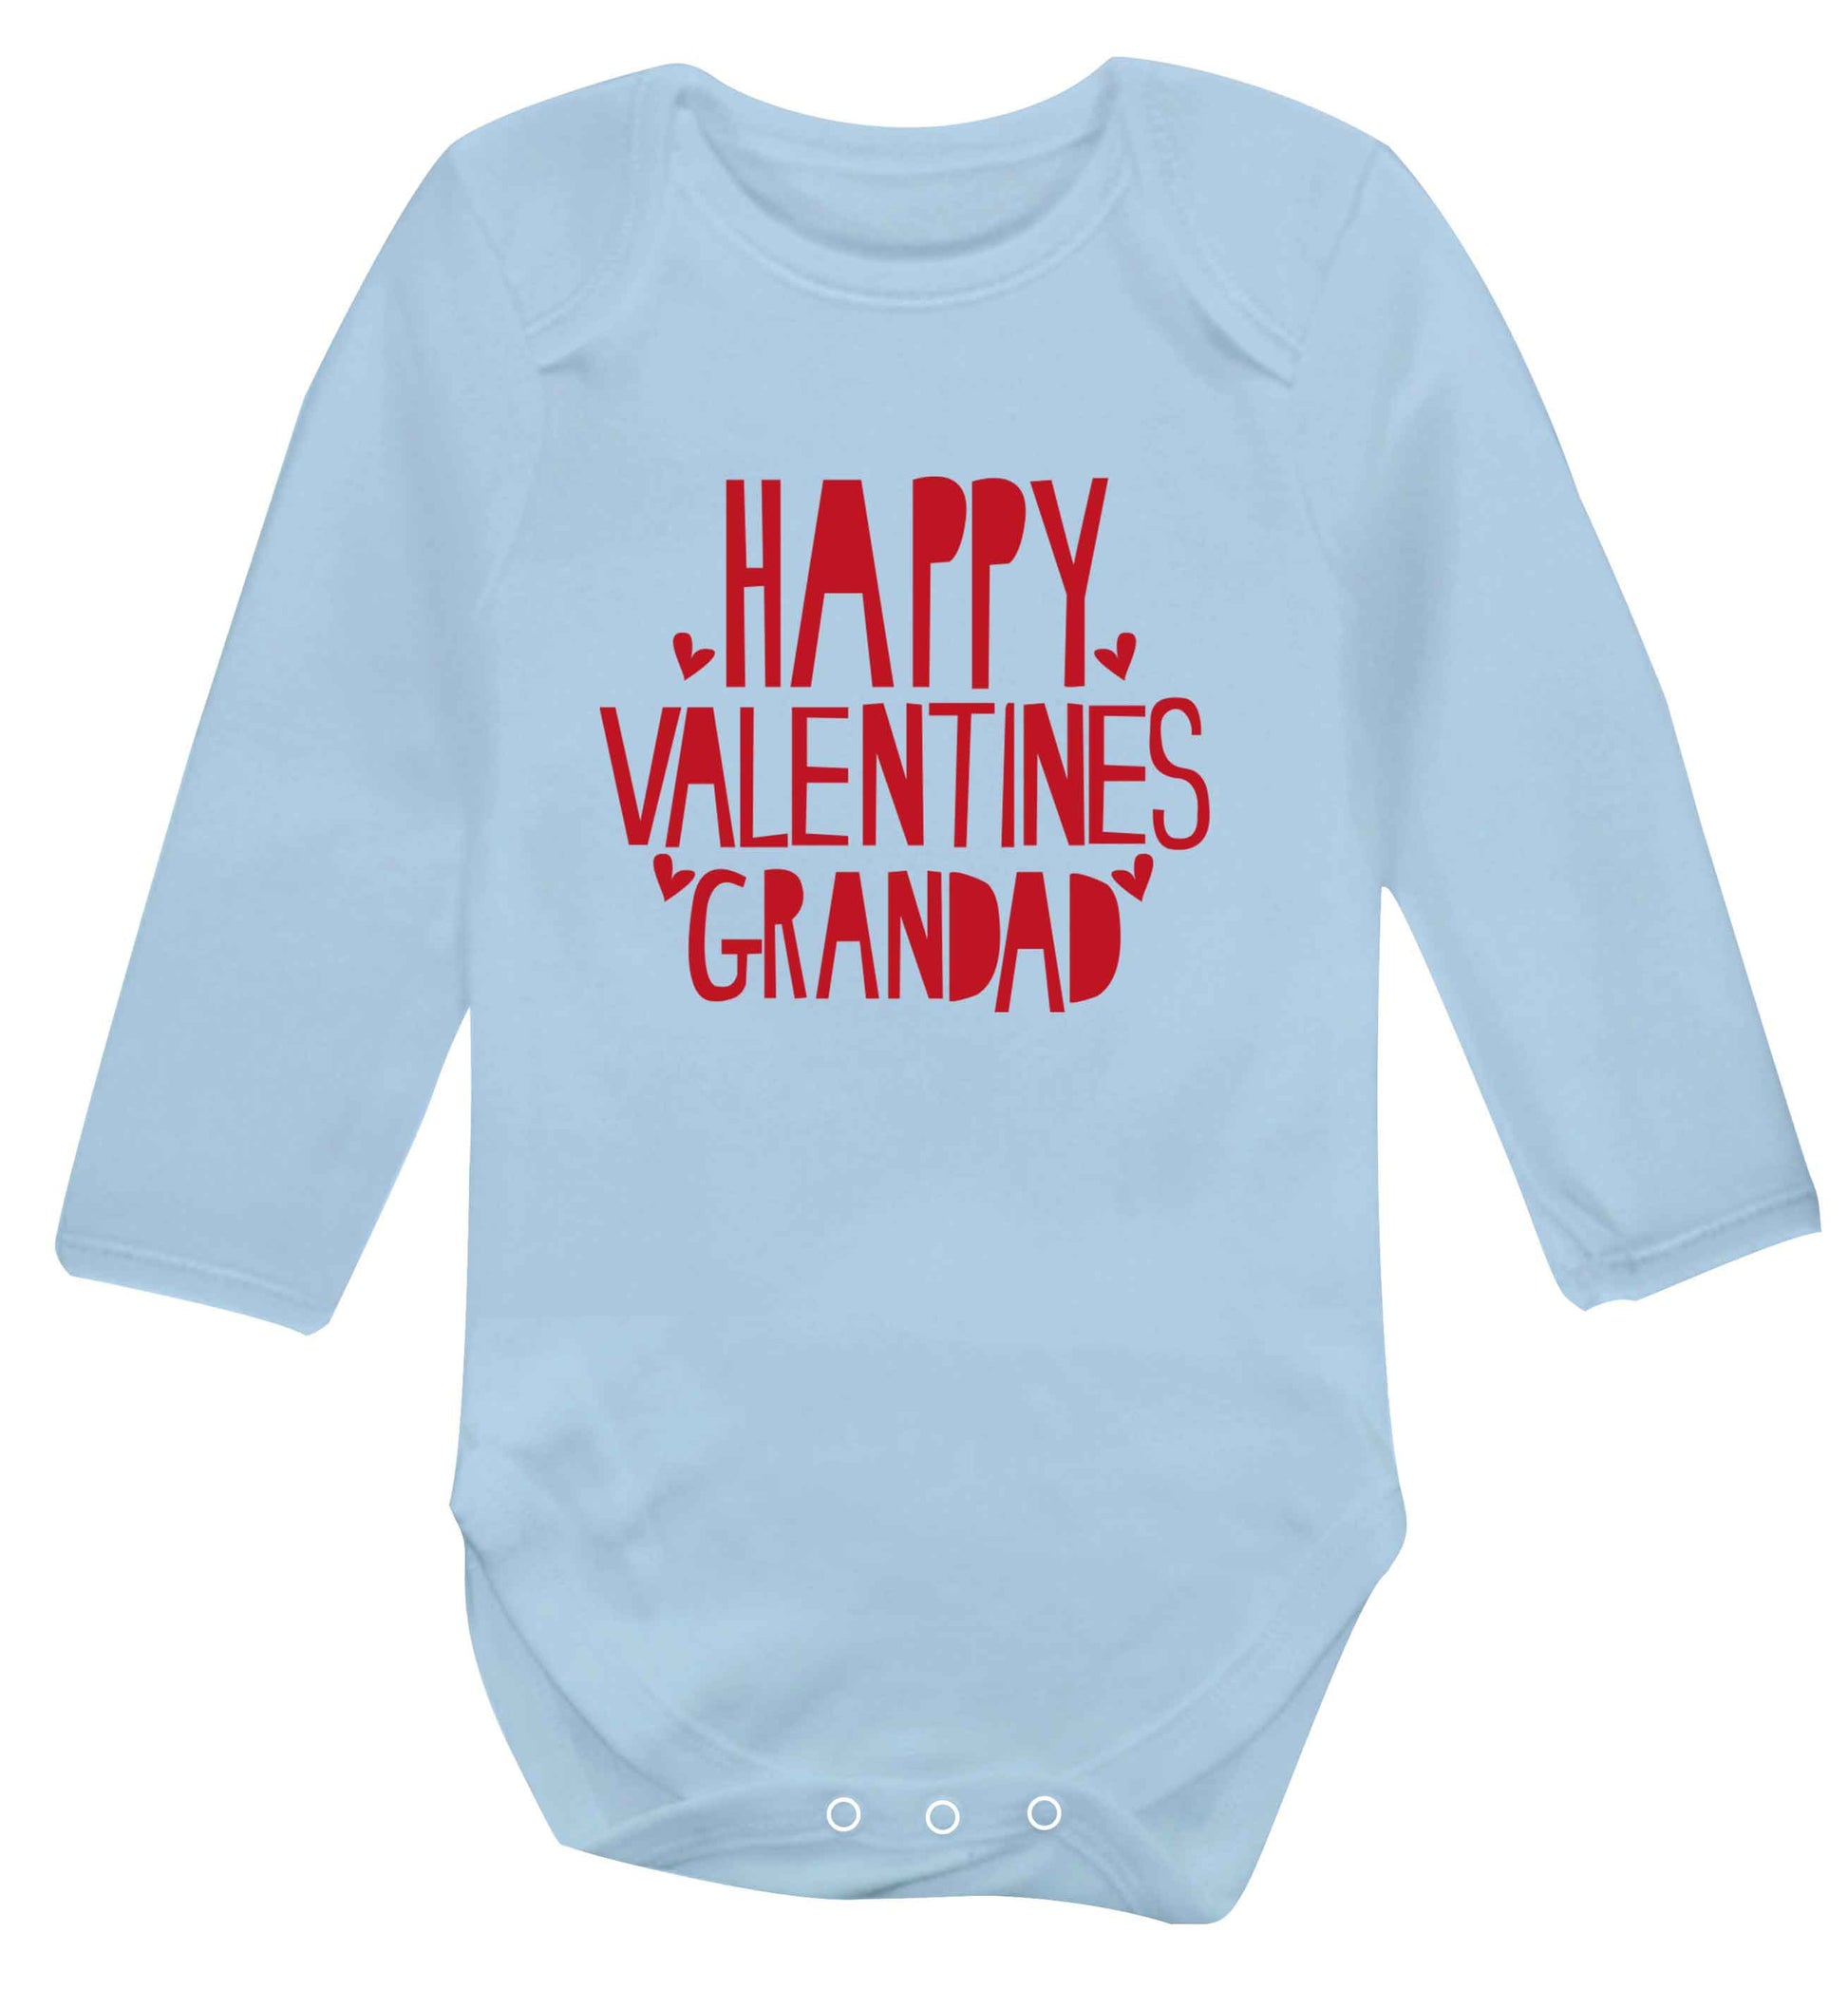 Happy valentines grandad baby vest long sleeved pale blue 6-12 months